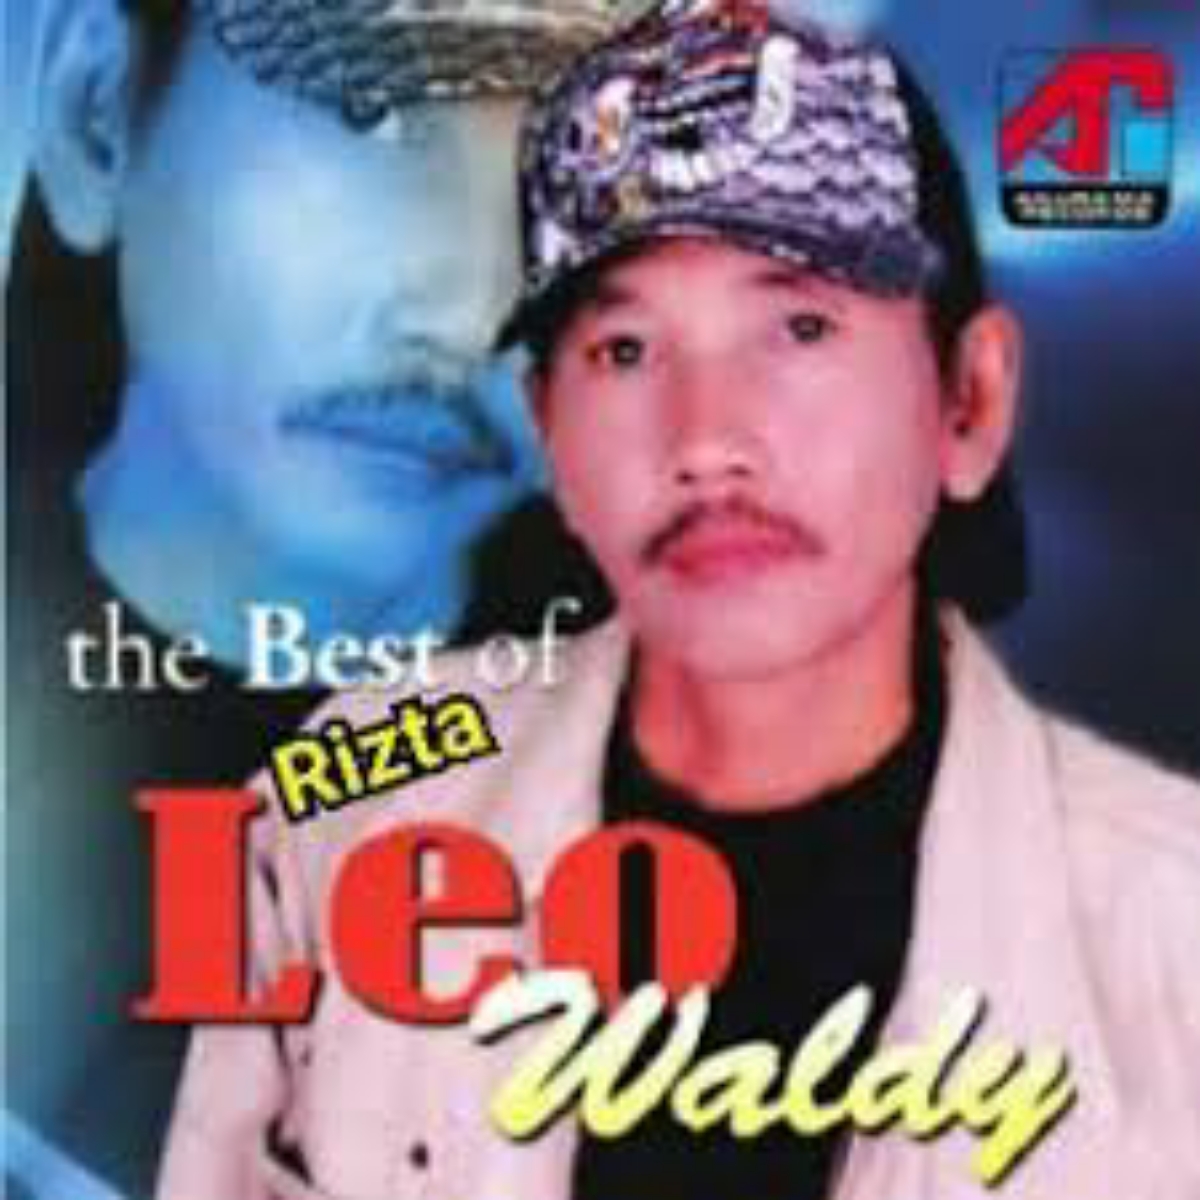 Set Leo Waldy Cover mp3